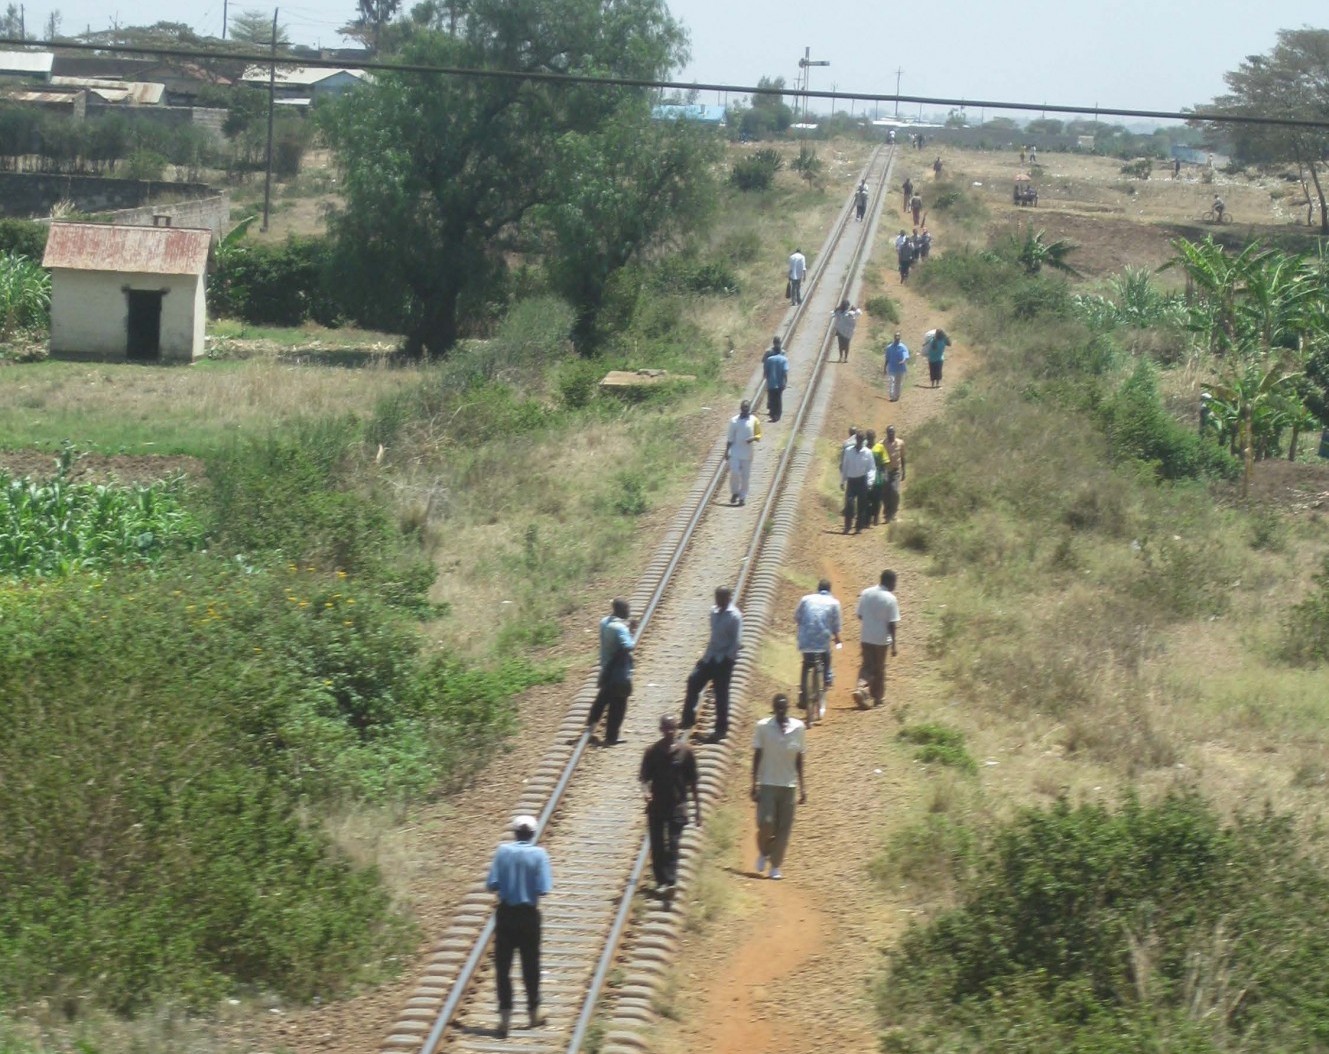 Men on railroad tracks